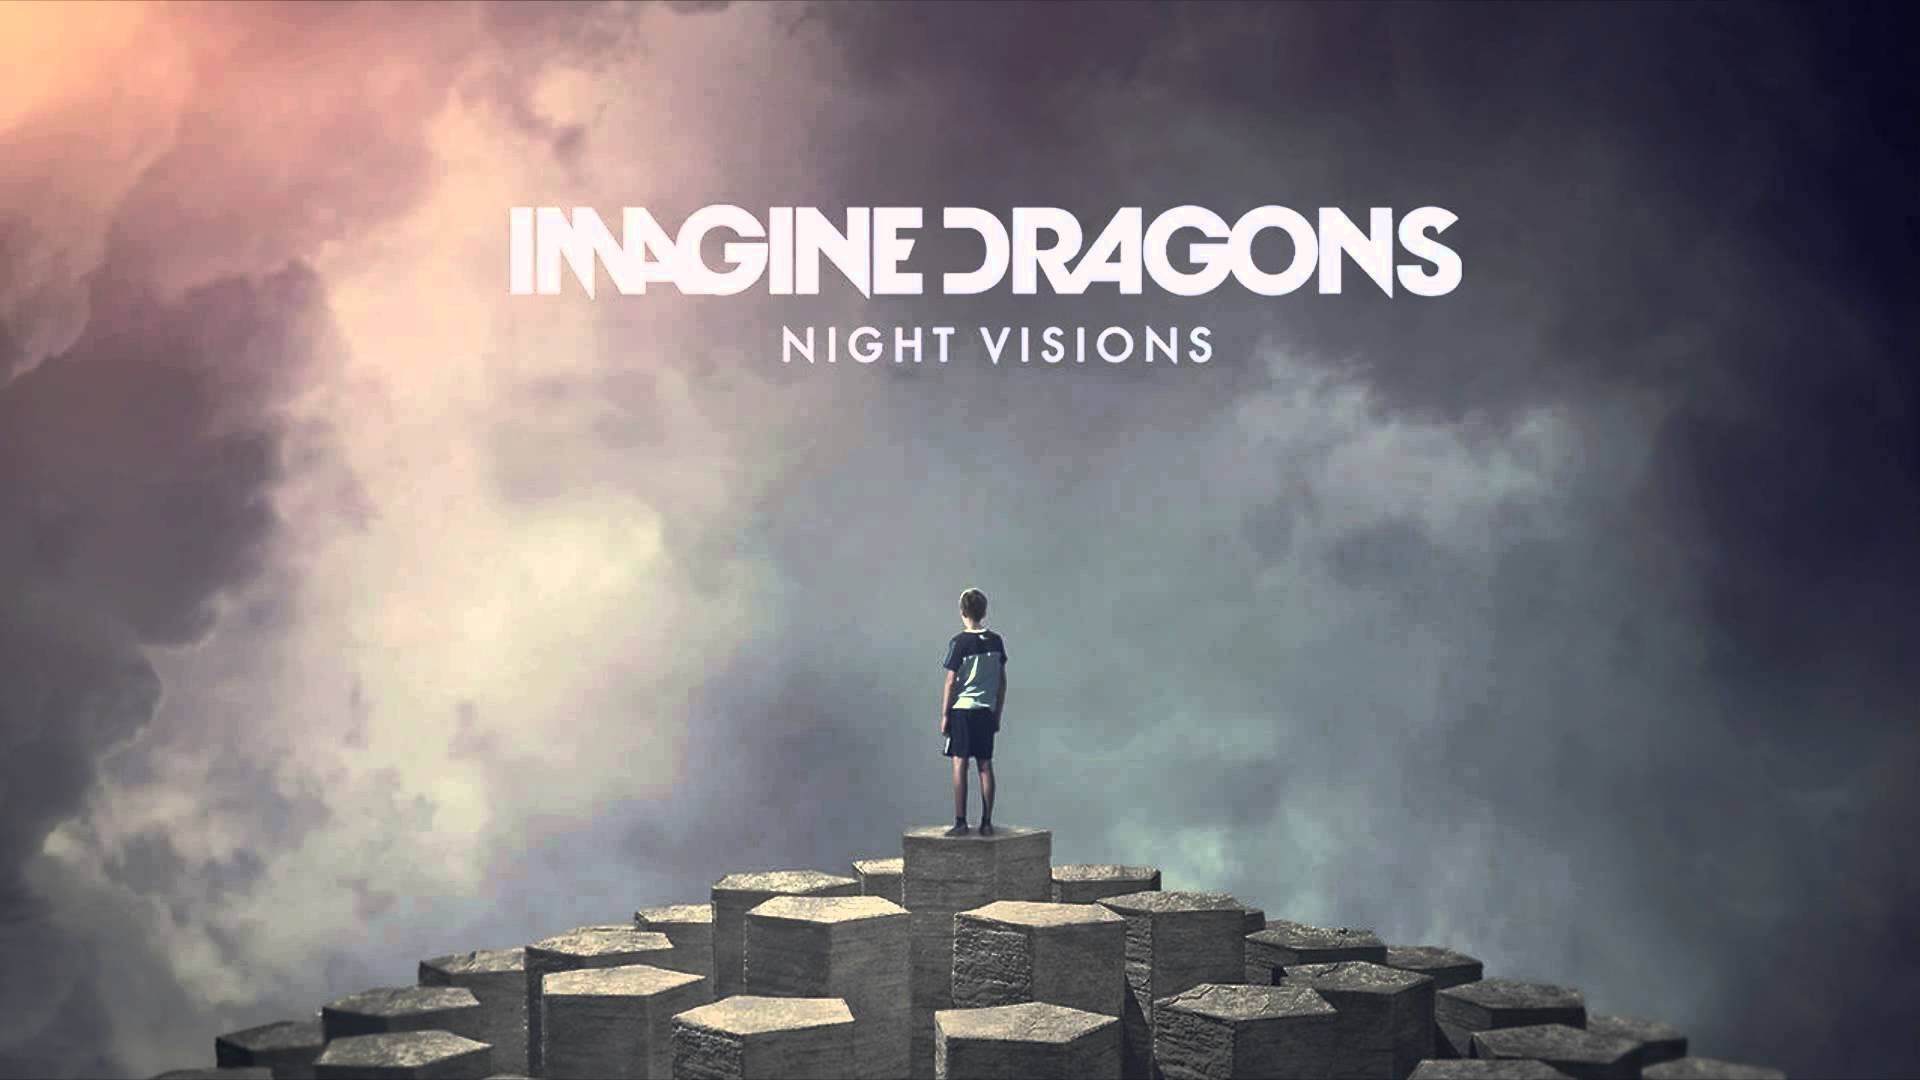 Might imagine. Imagine Dragons альбом Night Visions. Радиоактив imagine Dragons. Imagine Dragons Radioactive обложка. Imagine Dragons Night Visions обложка.